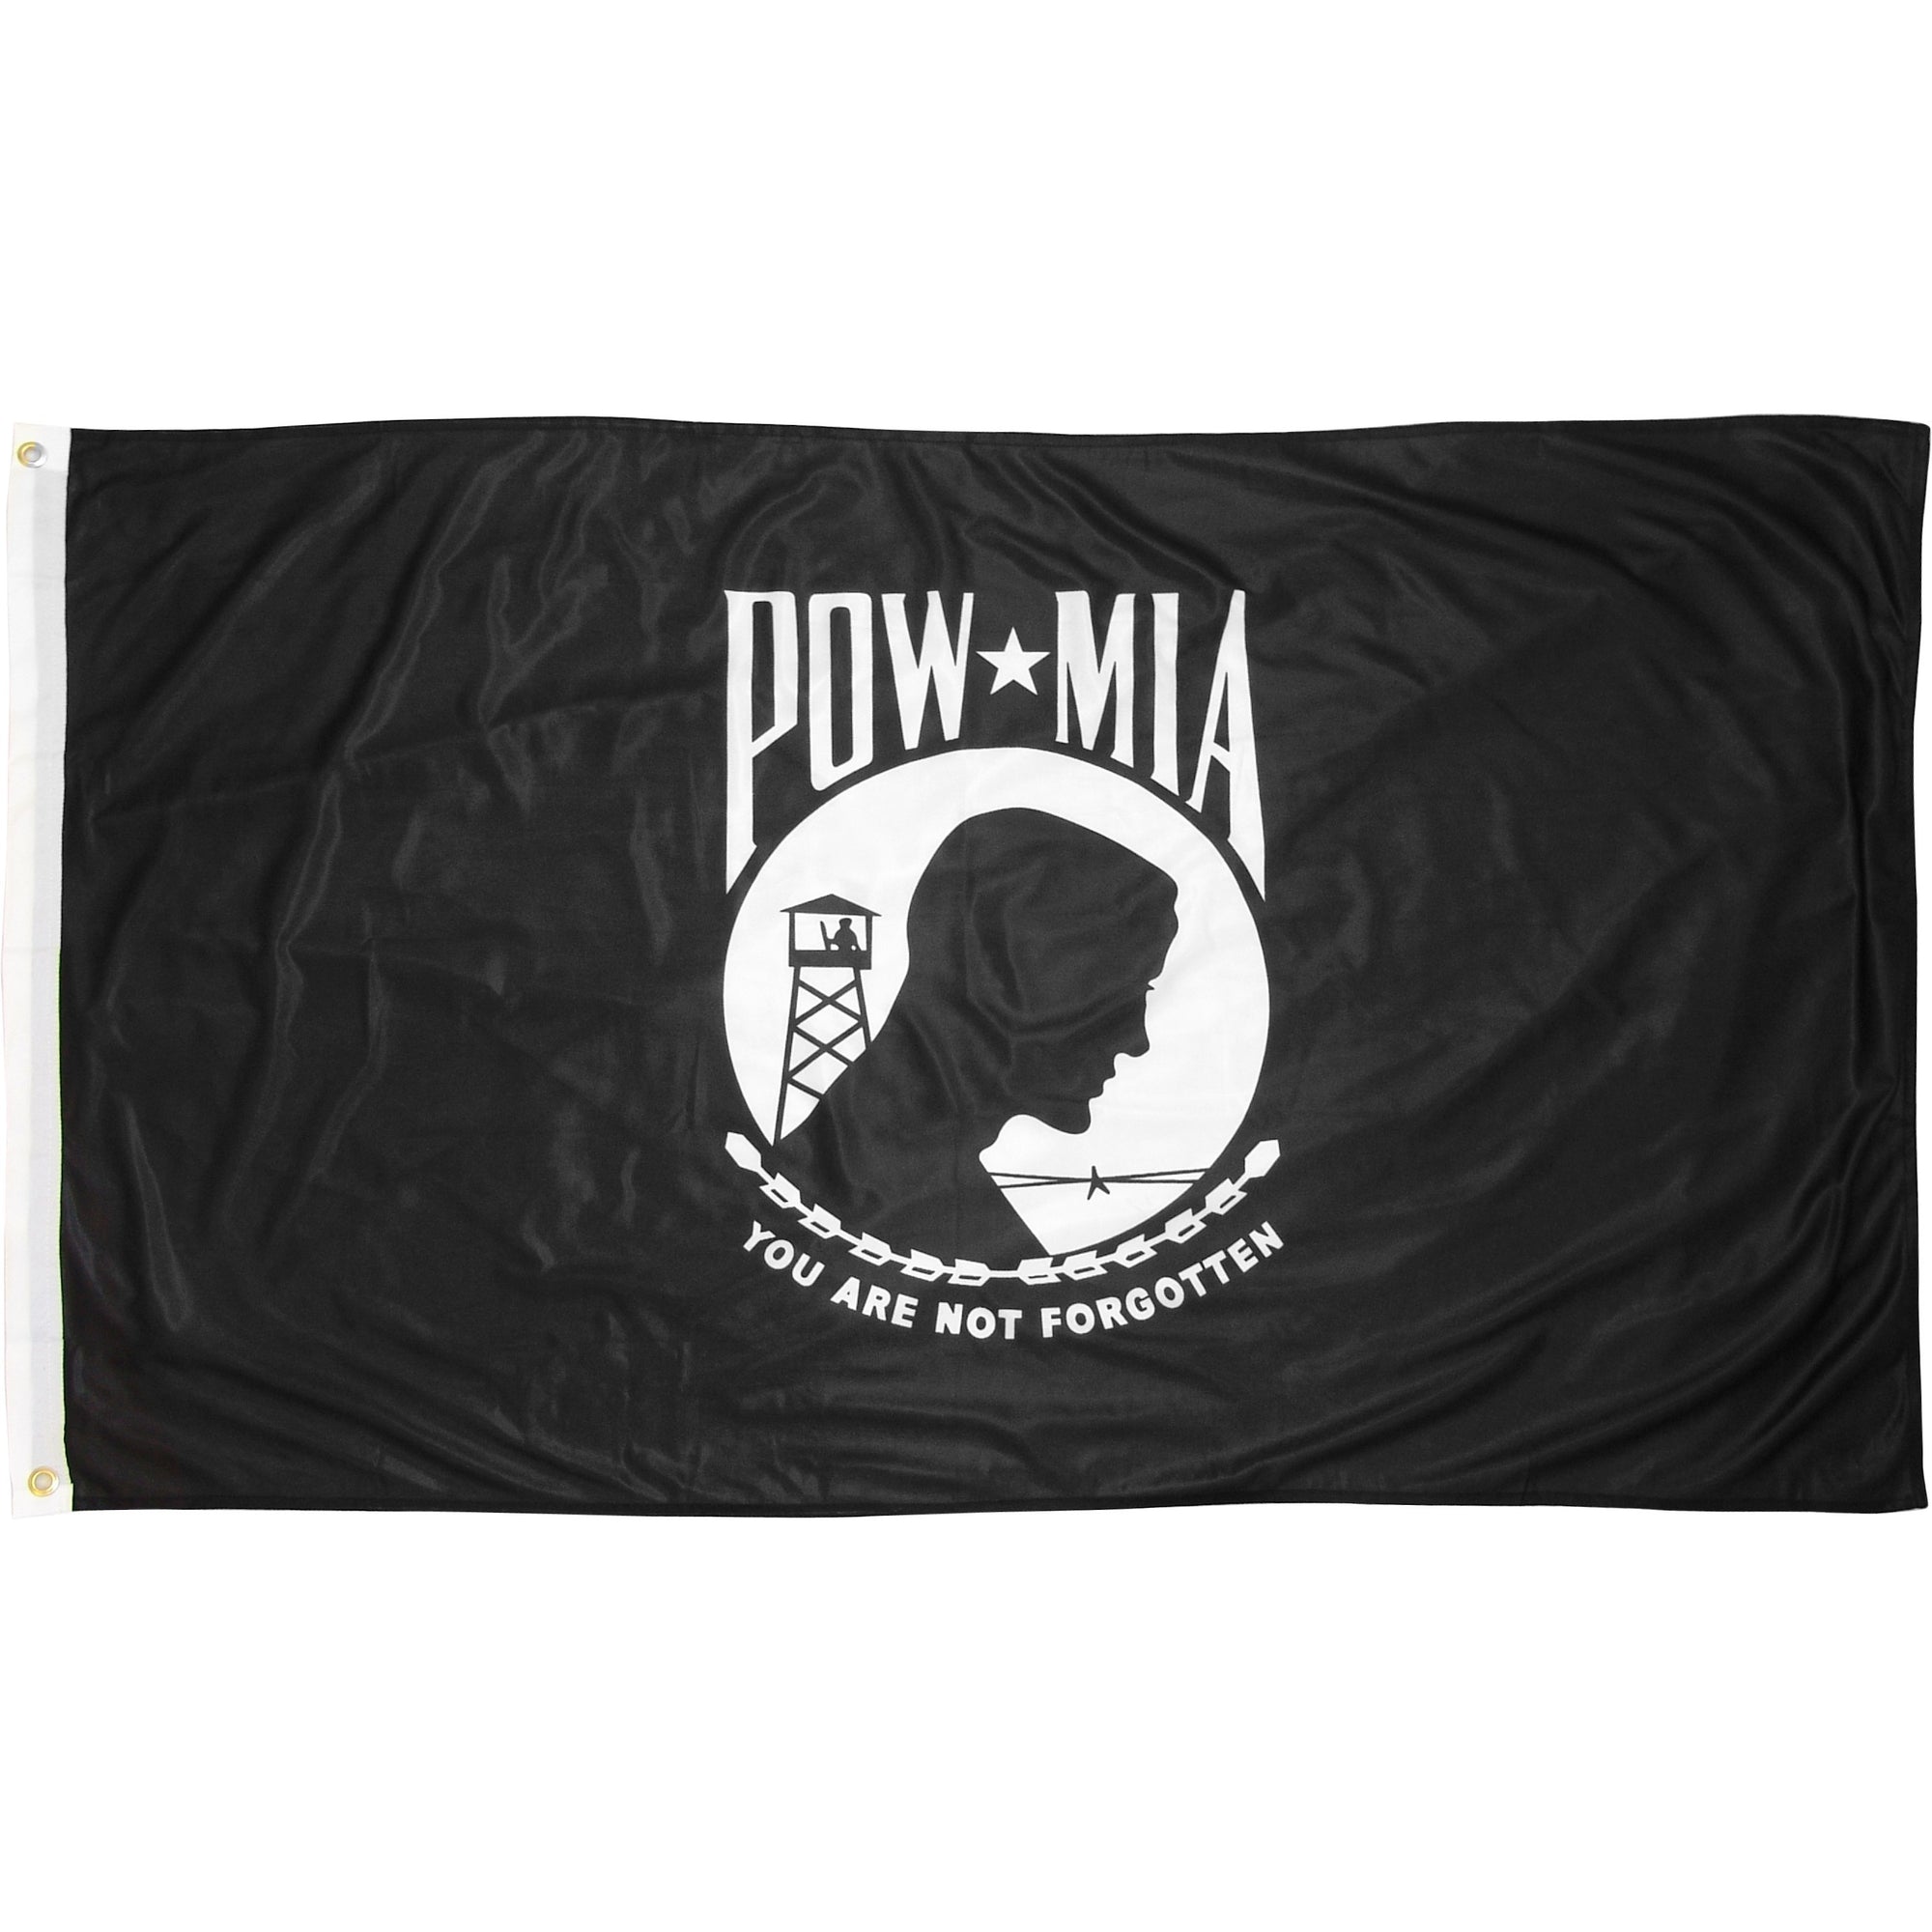 Shop POW MIA high quality american made nylon flags